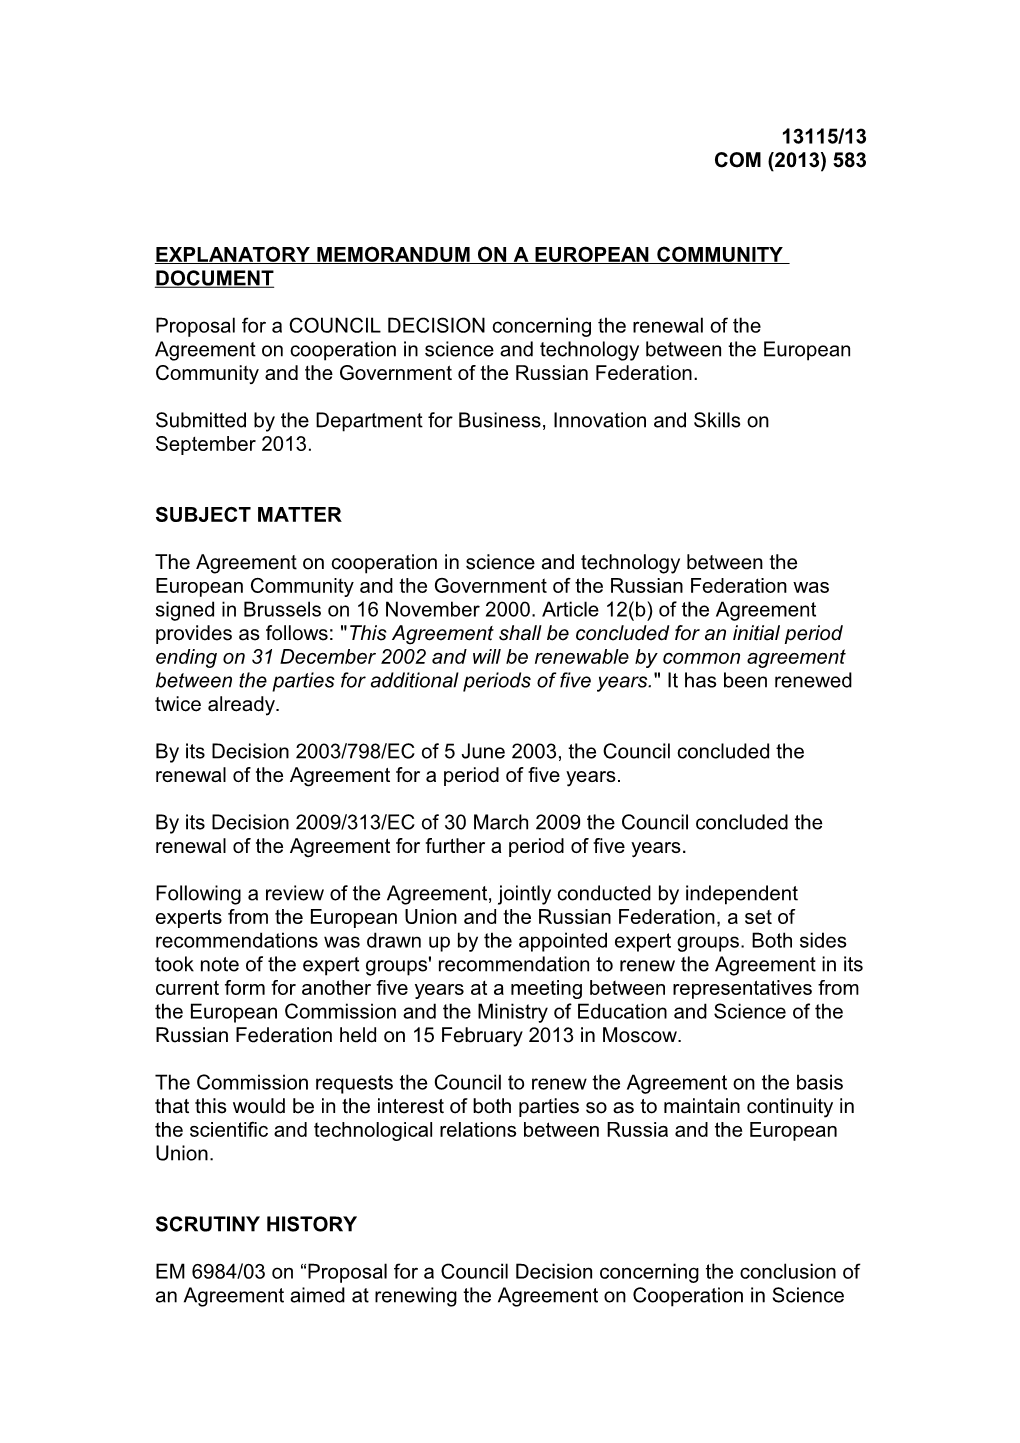 Explanatory Memorandum on a European Community Document